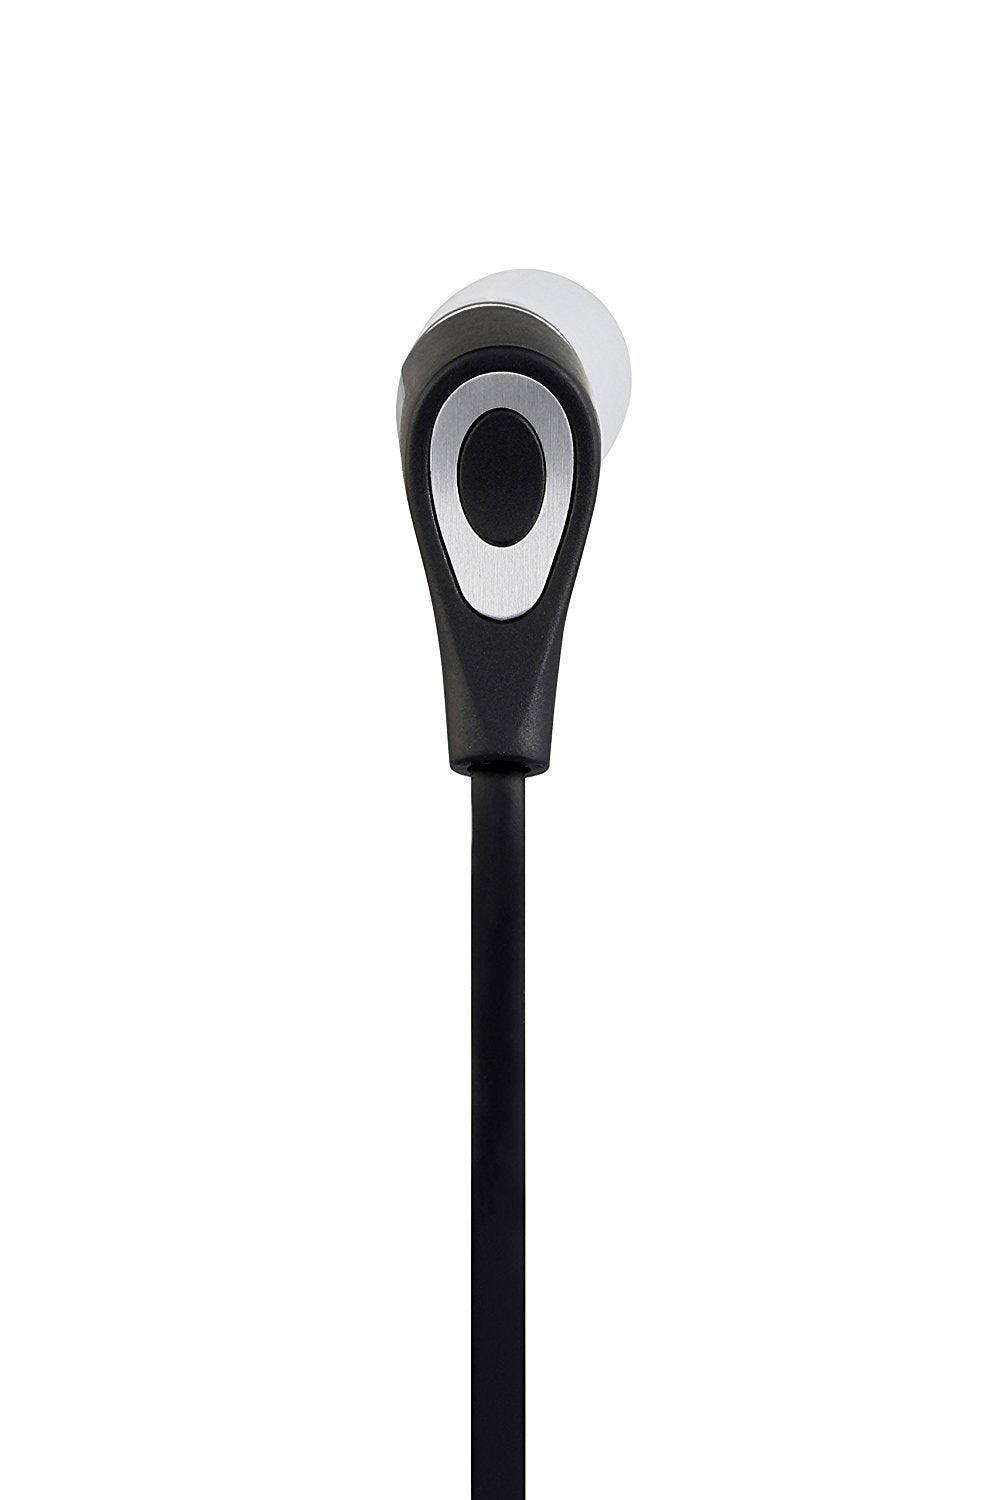 Klipsch R6m In-Ear Headphones